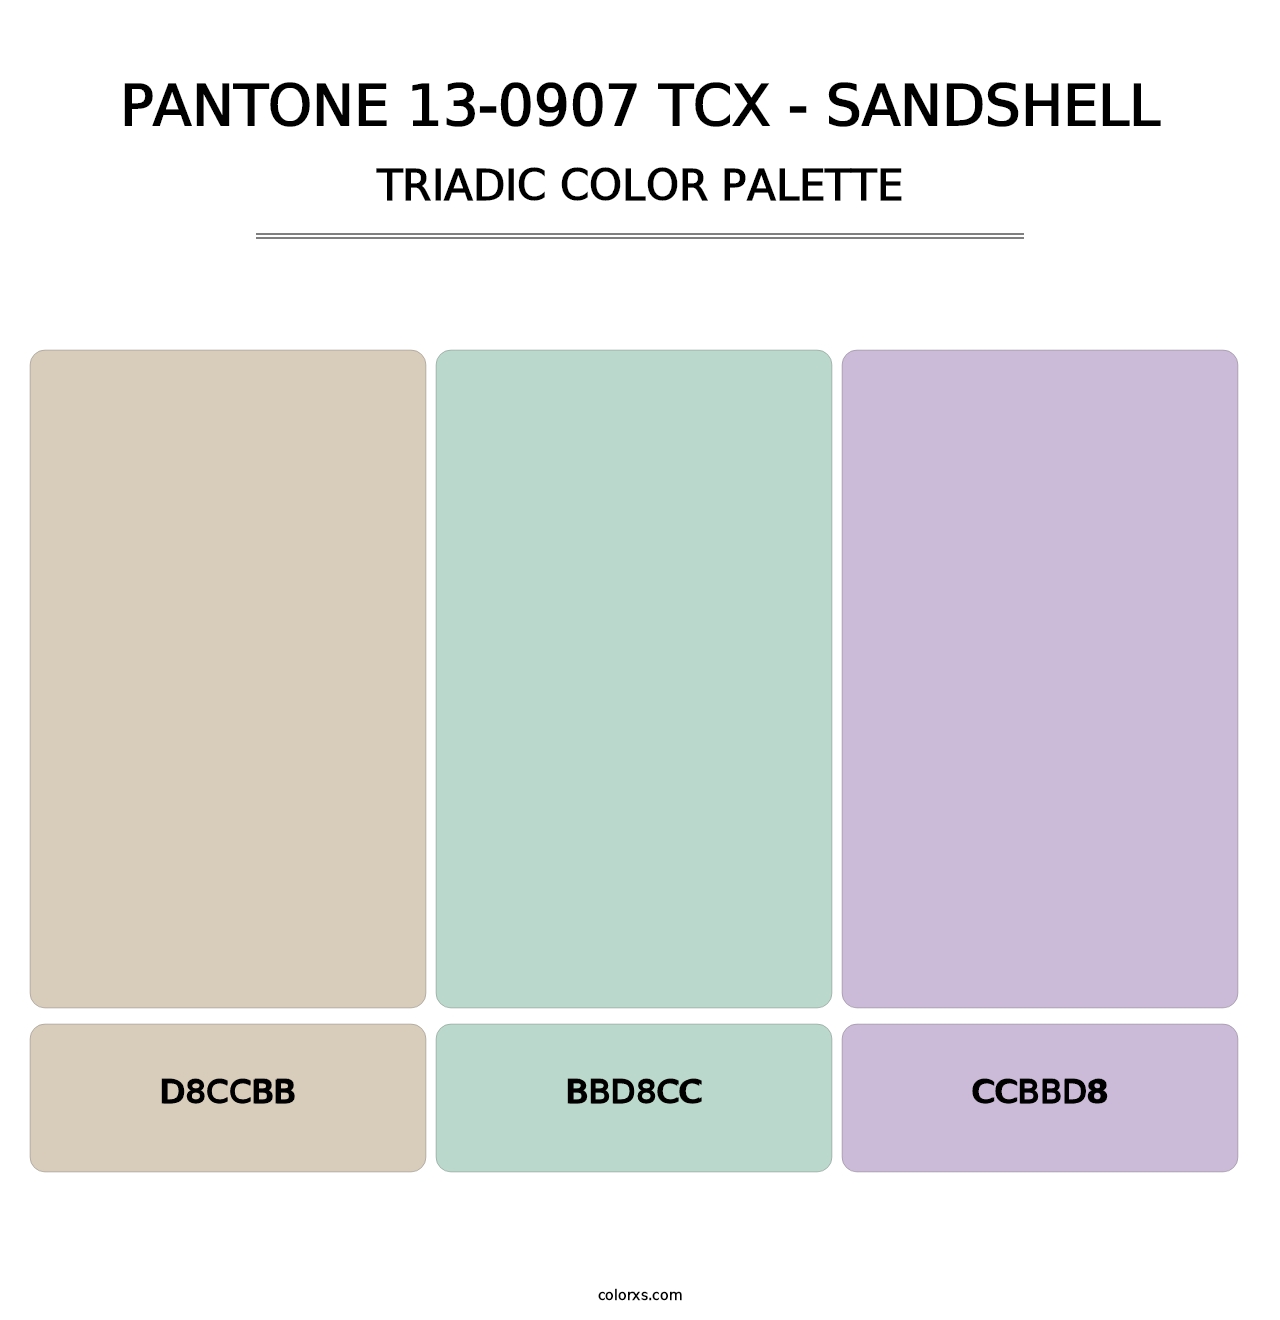 PANTONE 13-0907 TCX - Sandshell - Triadic Color Palette